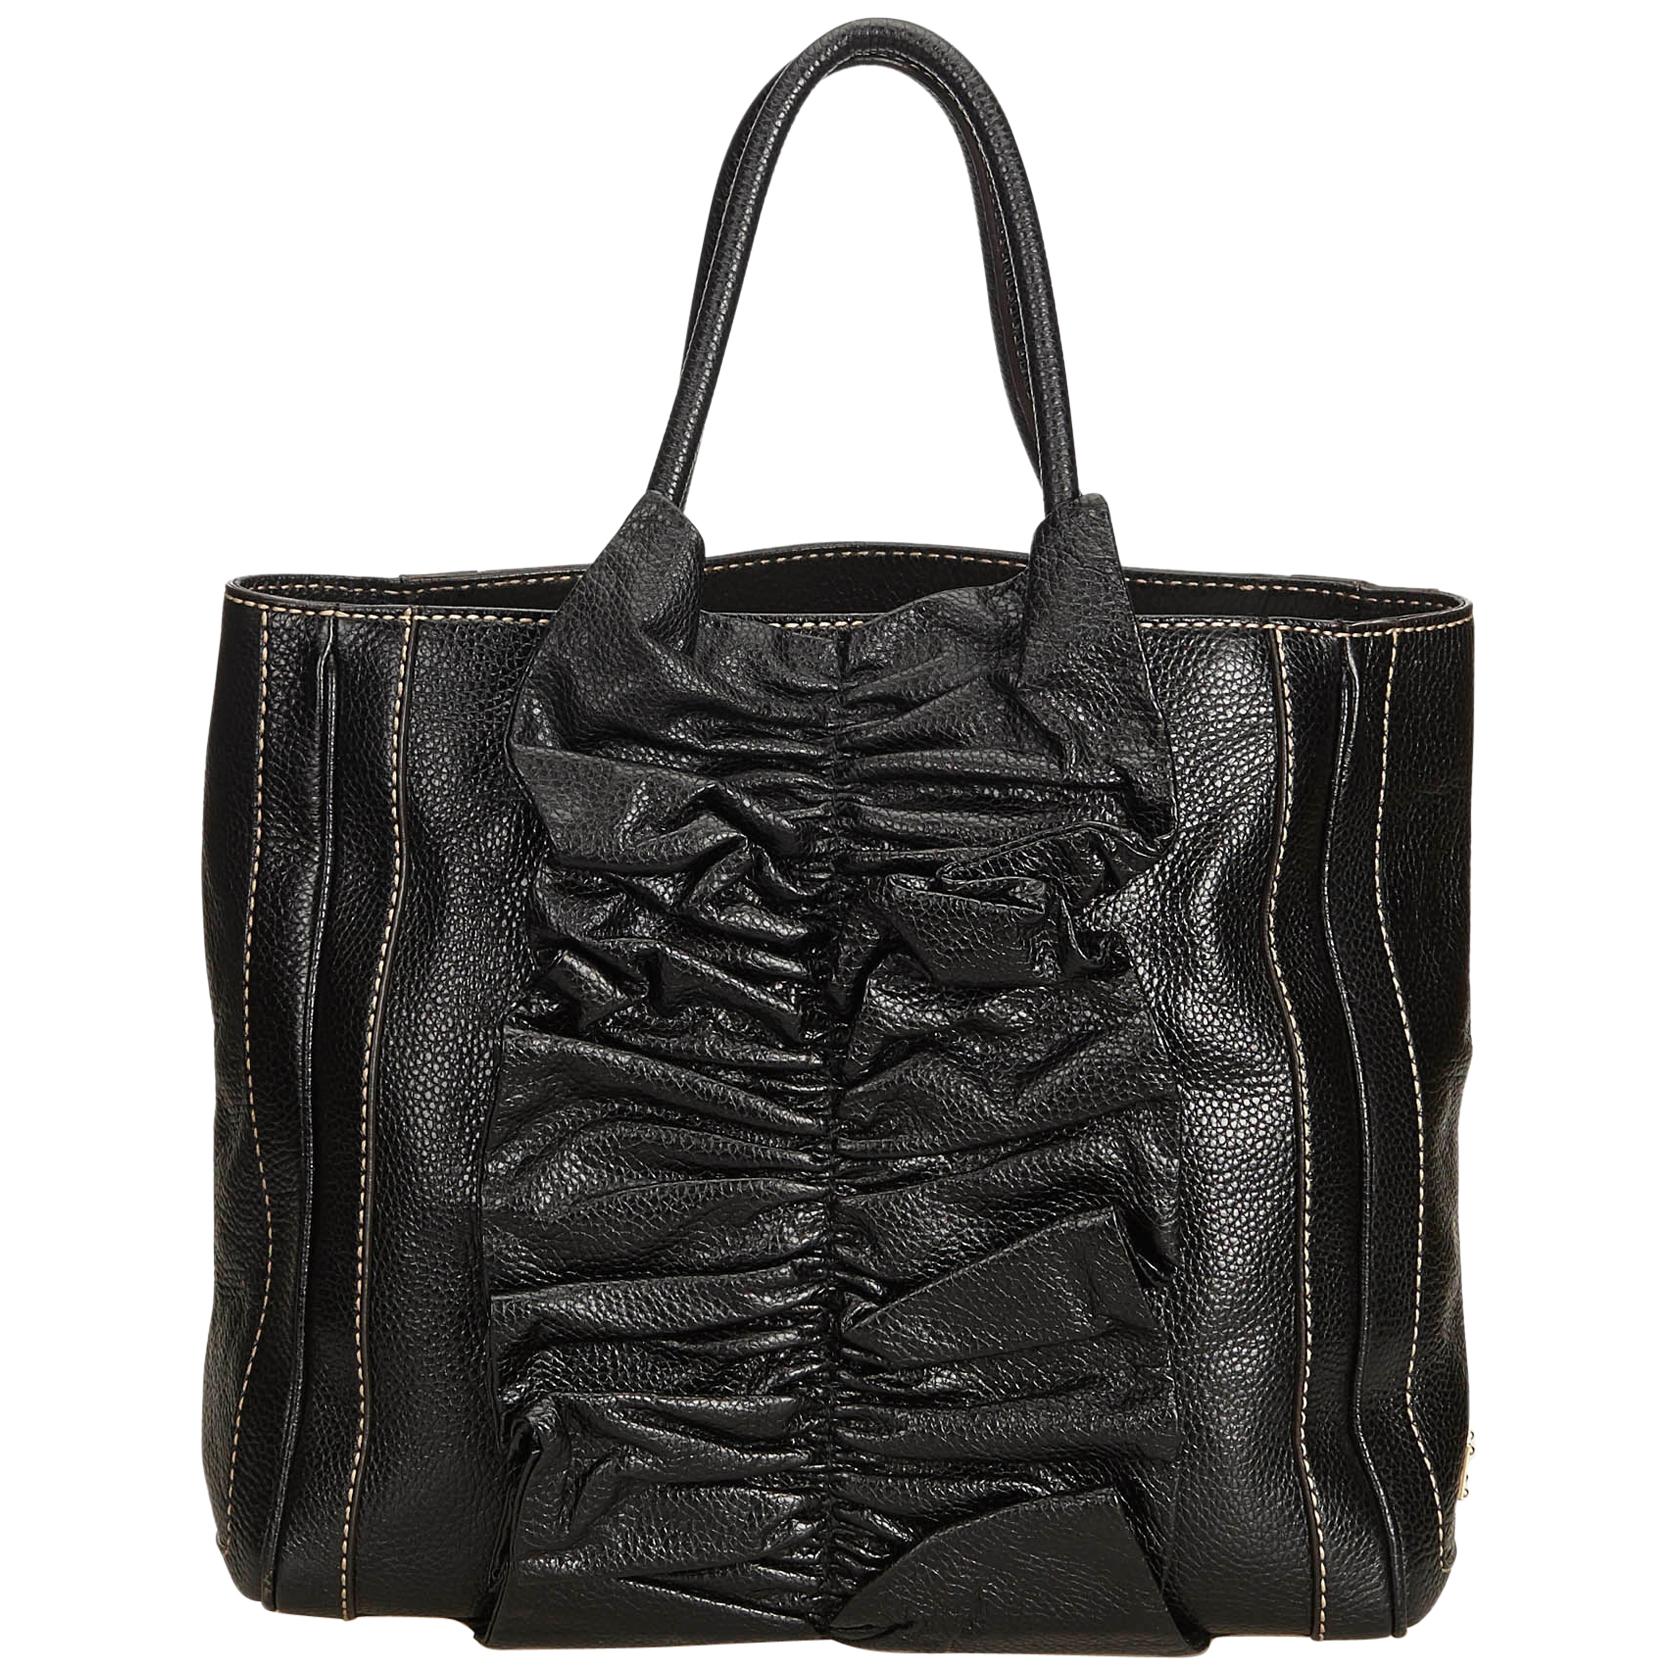 Dolce&Gabbana Black Gathered Leather Tote Bag